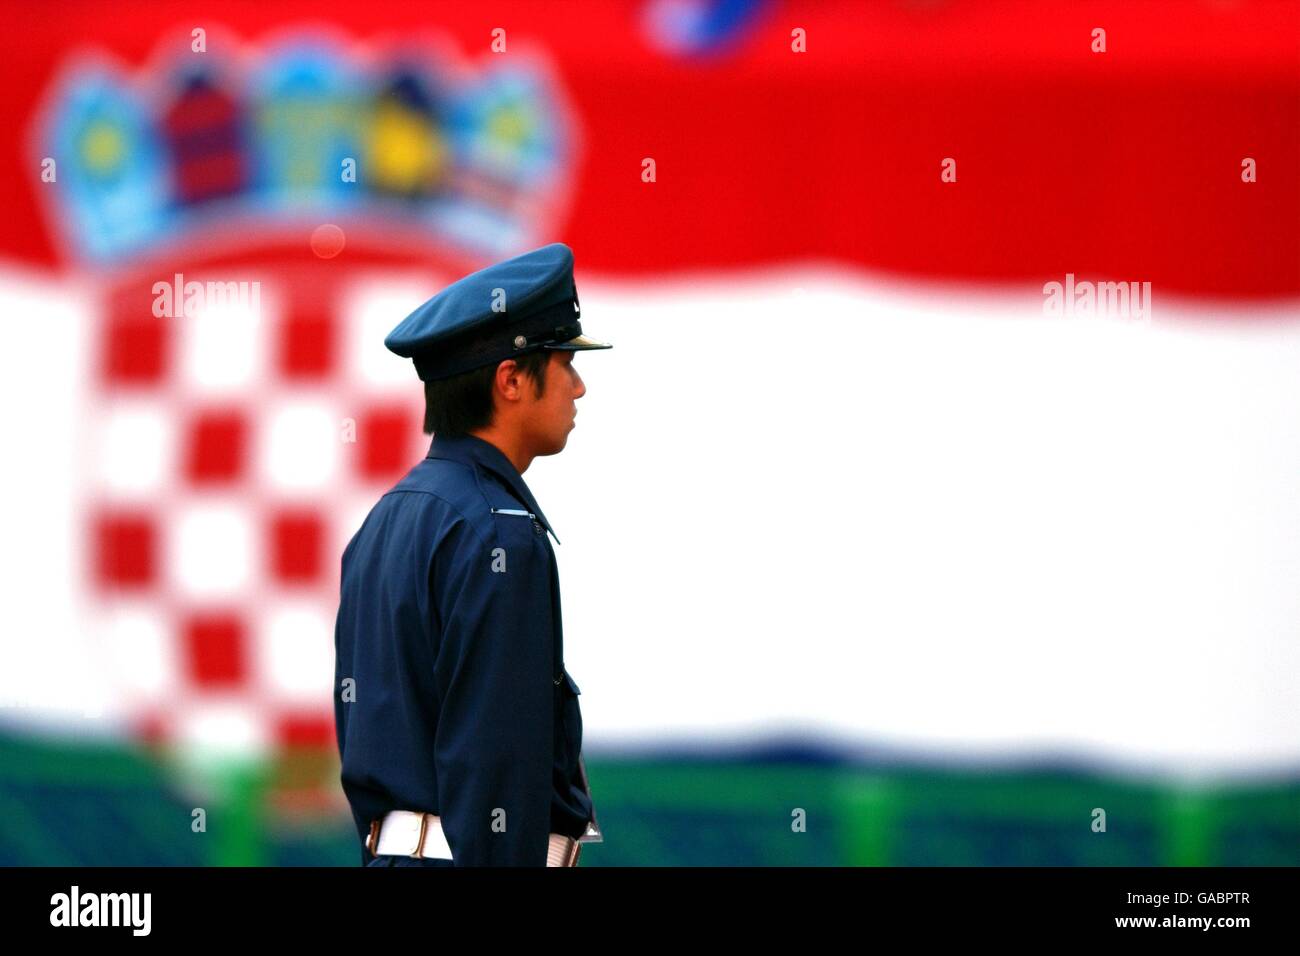 Soccer - FIFA World Cup 2002 - Group G - Croatia v Mexico. A Japanese Police Officer keeps an eye on the Croatia fans Stock Photo